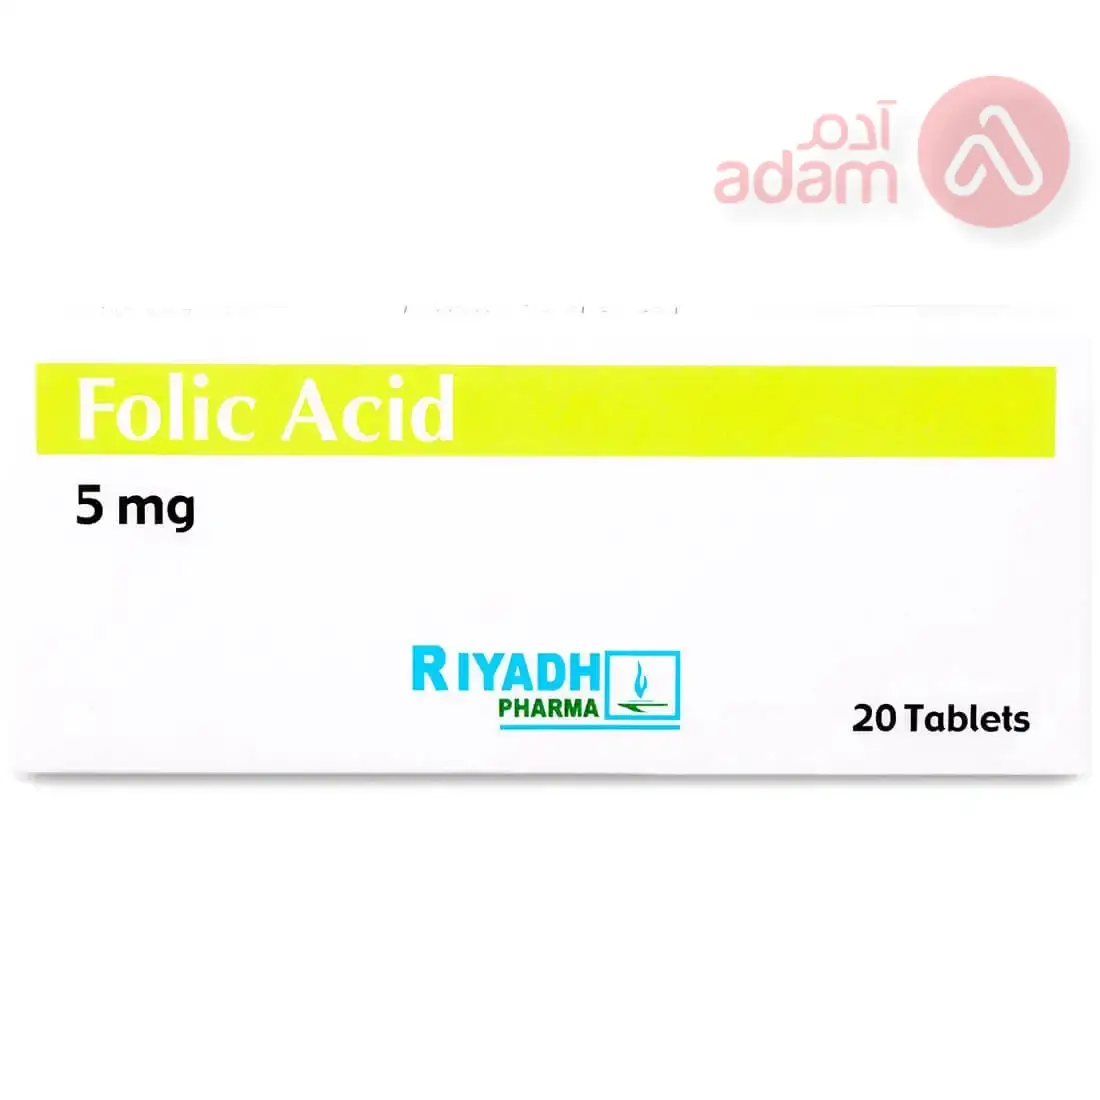 Folic Acid 5Mg | 20Tab